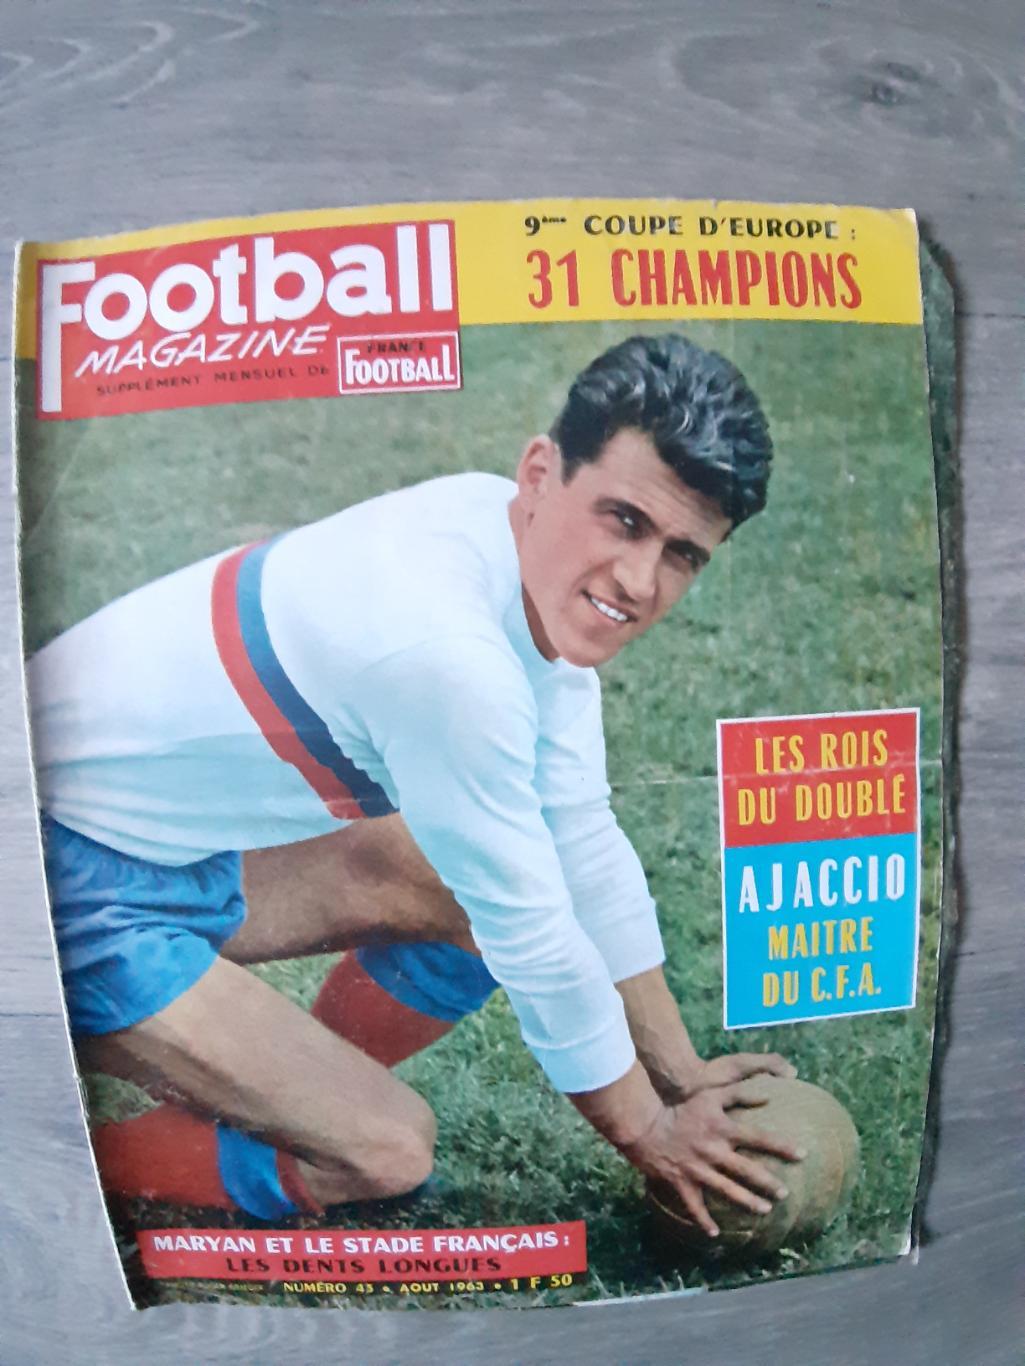 Football Magazine1963